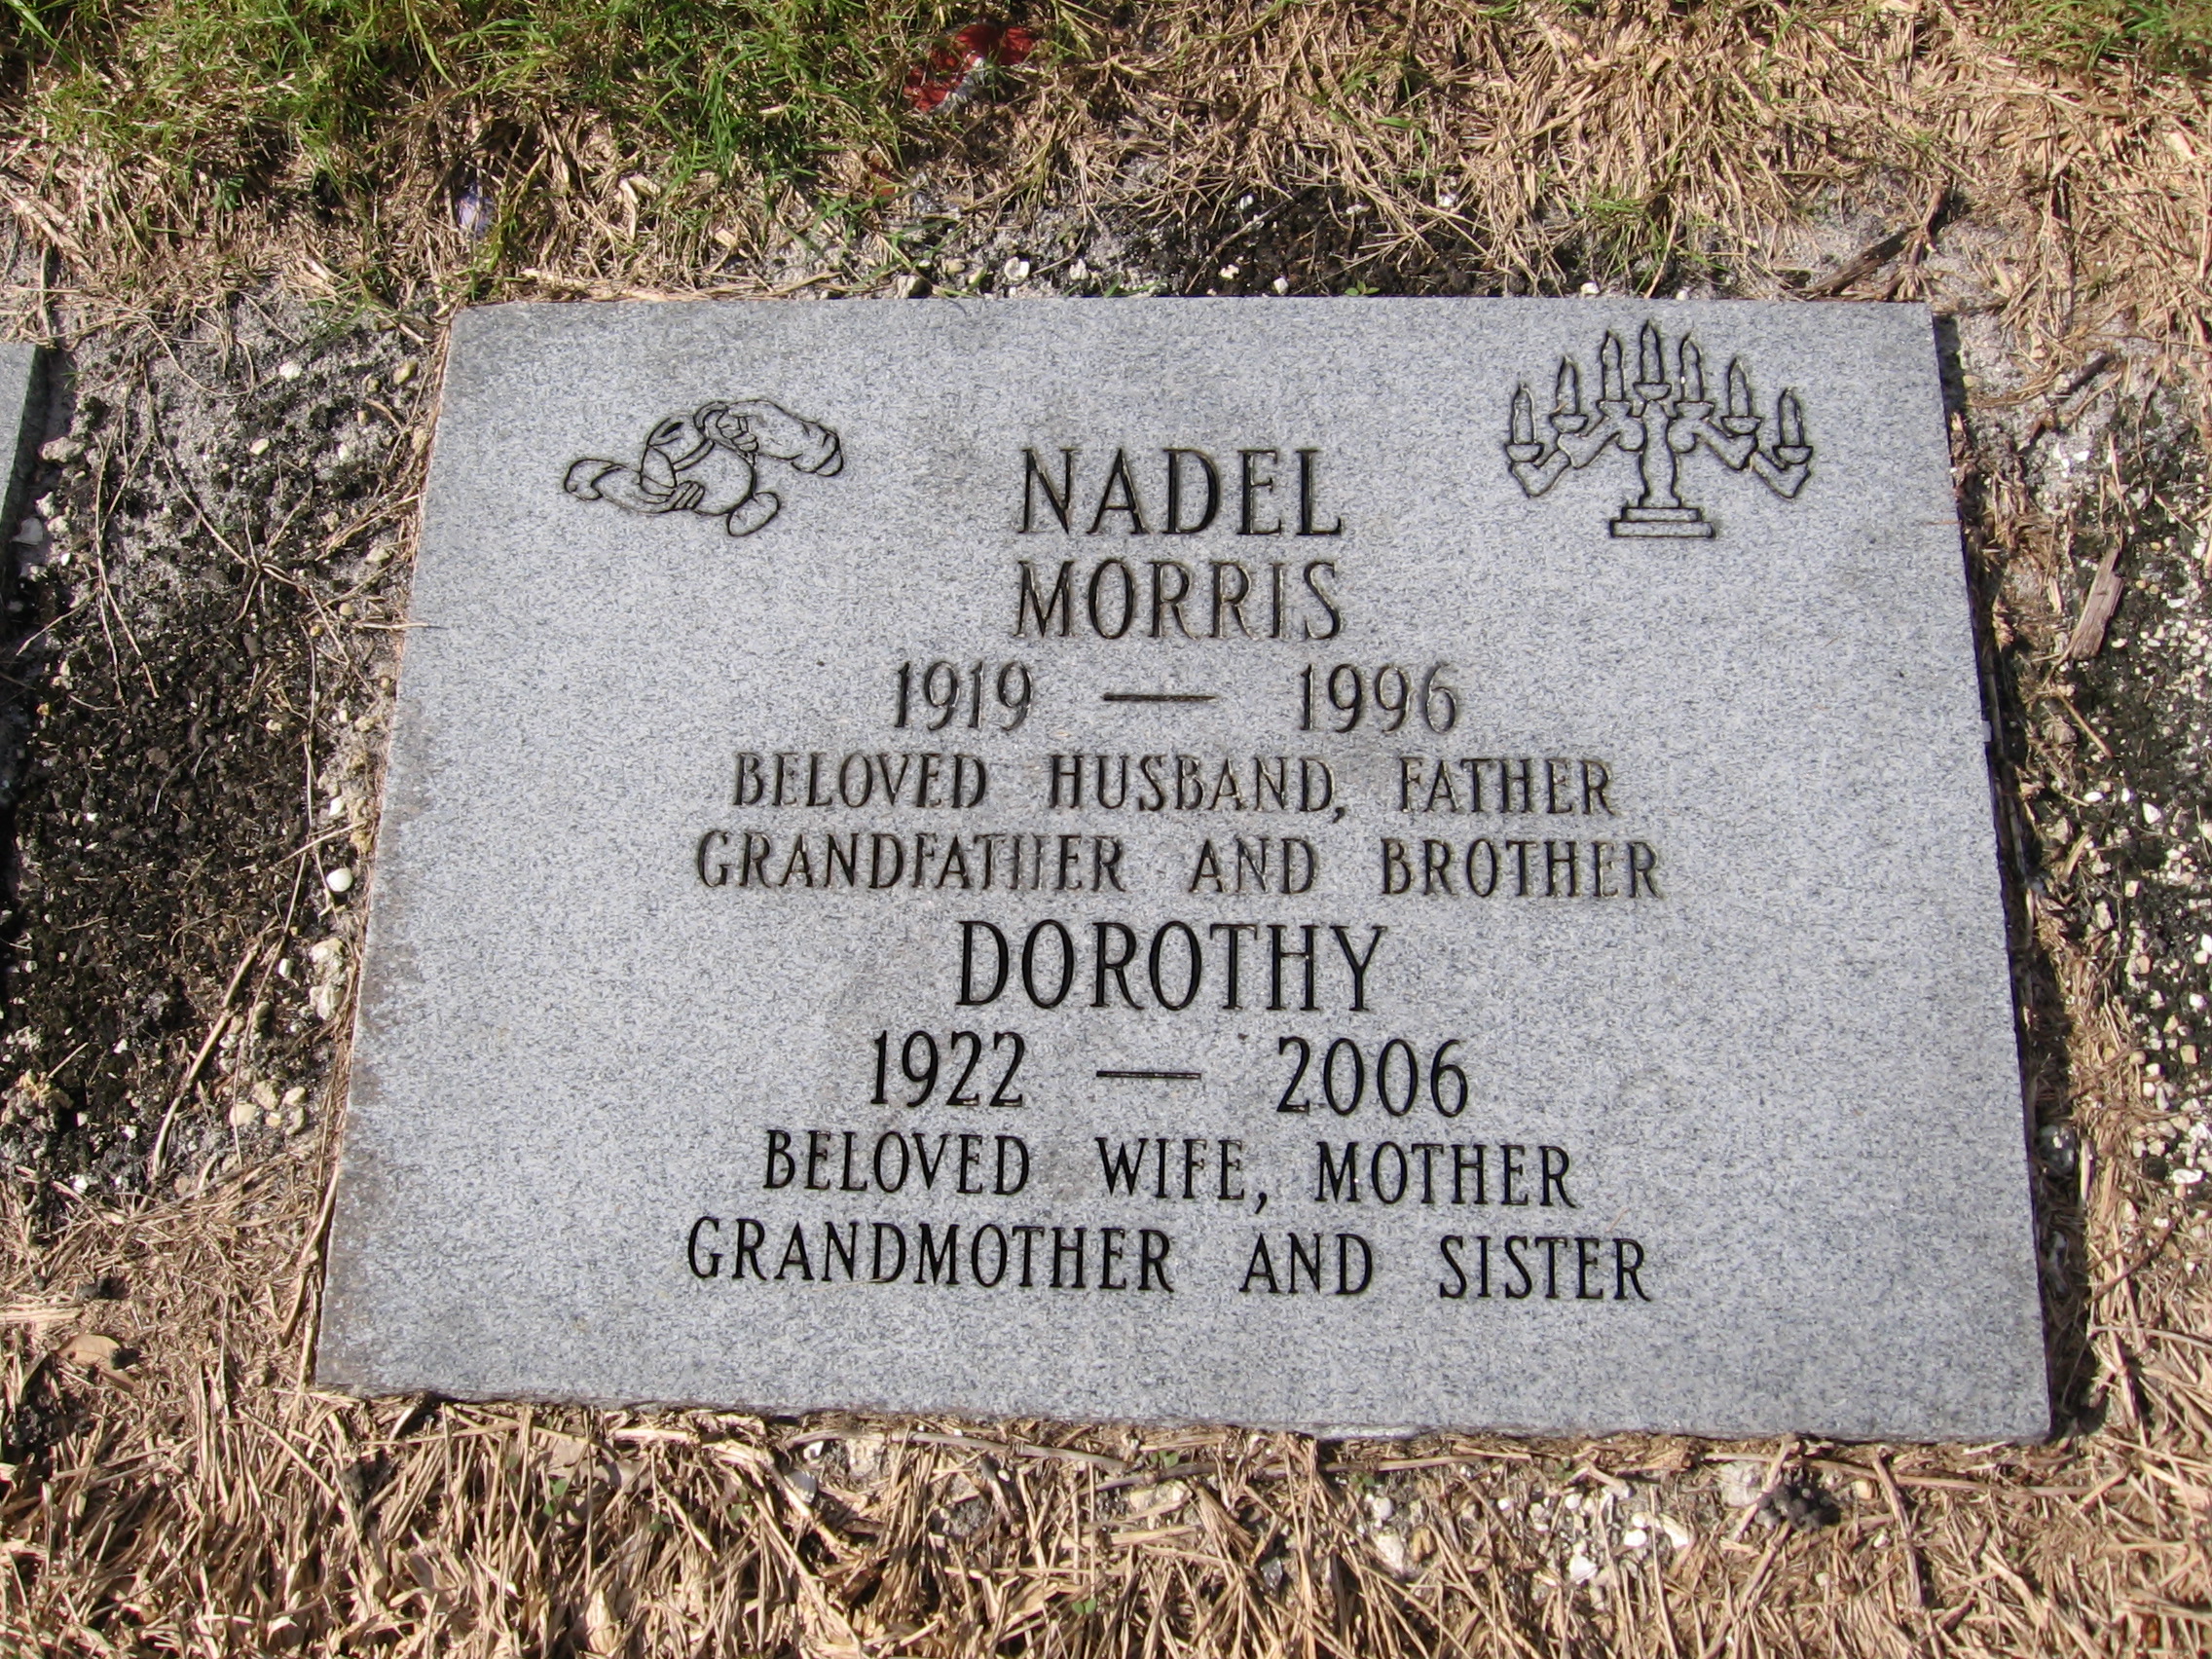 Morris Nadel